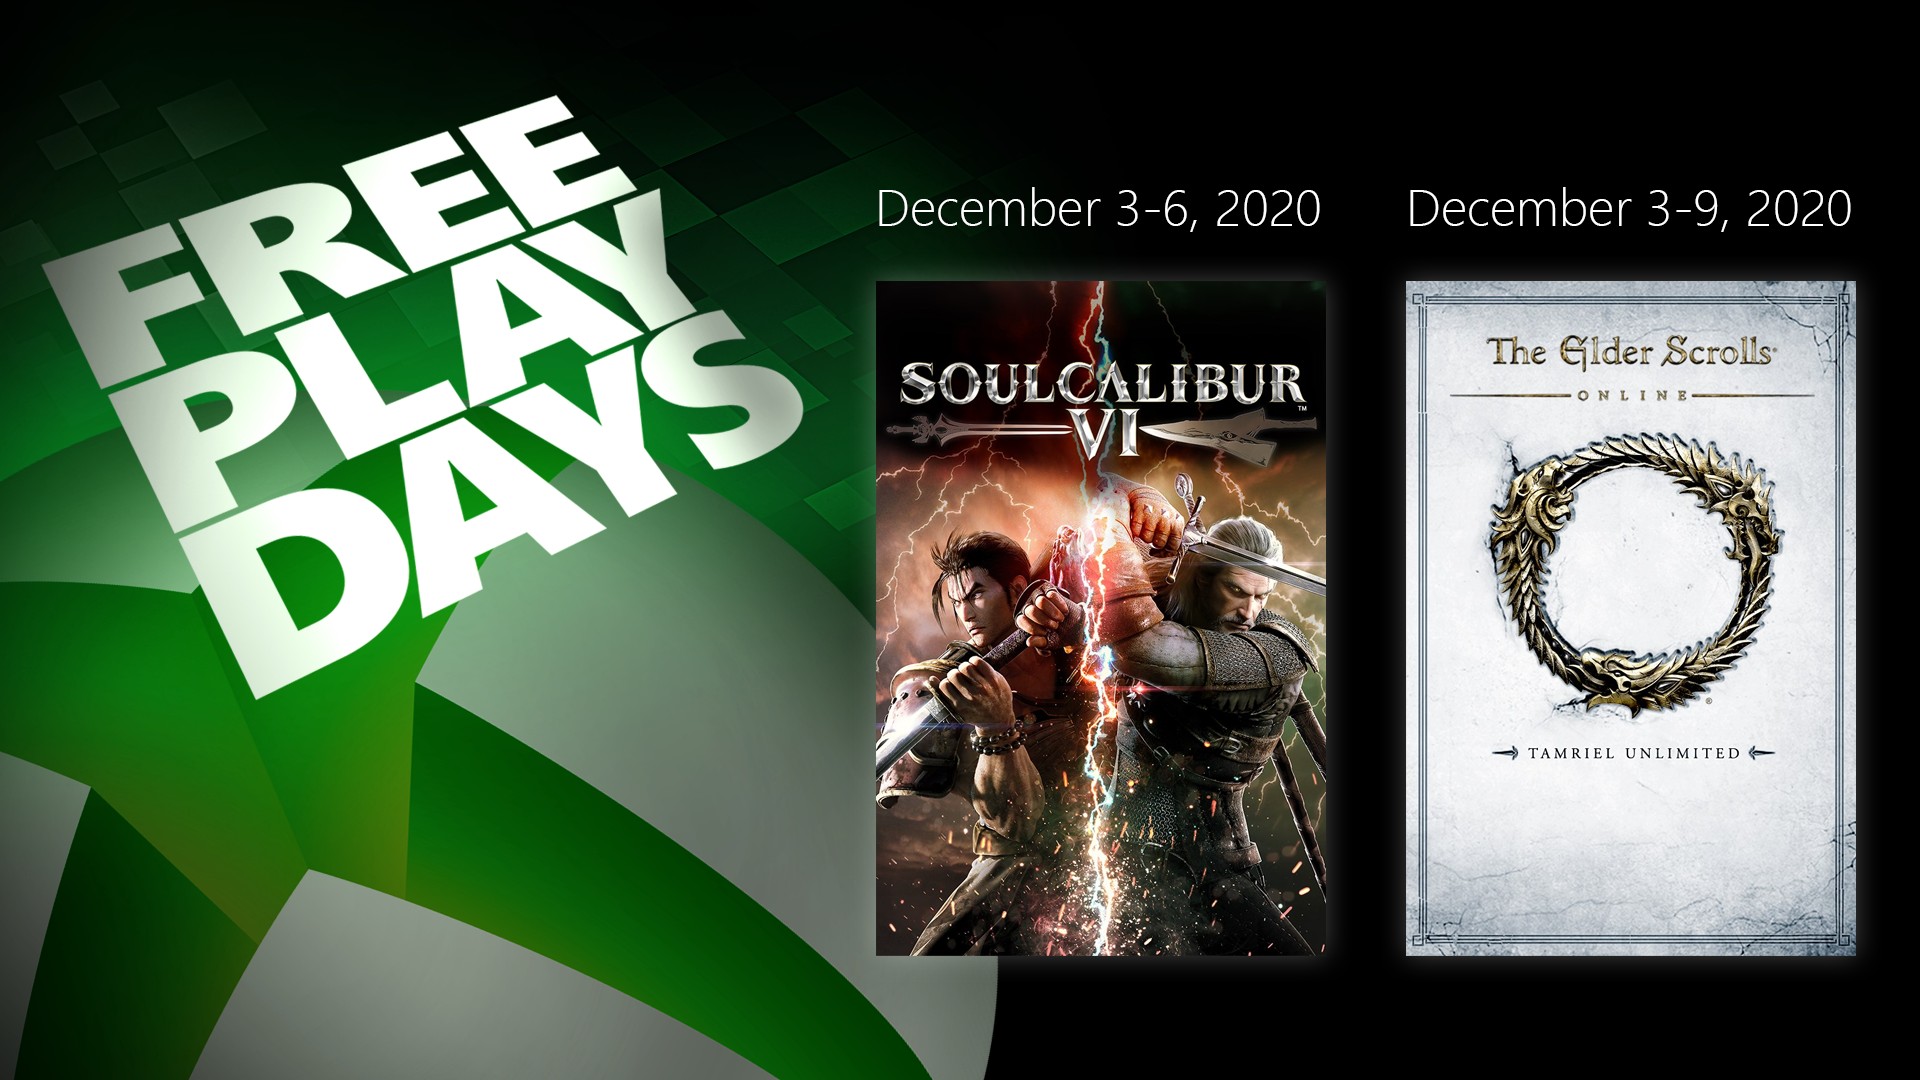 Free Play Days - December 3, 2020